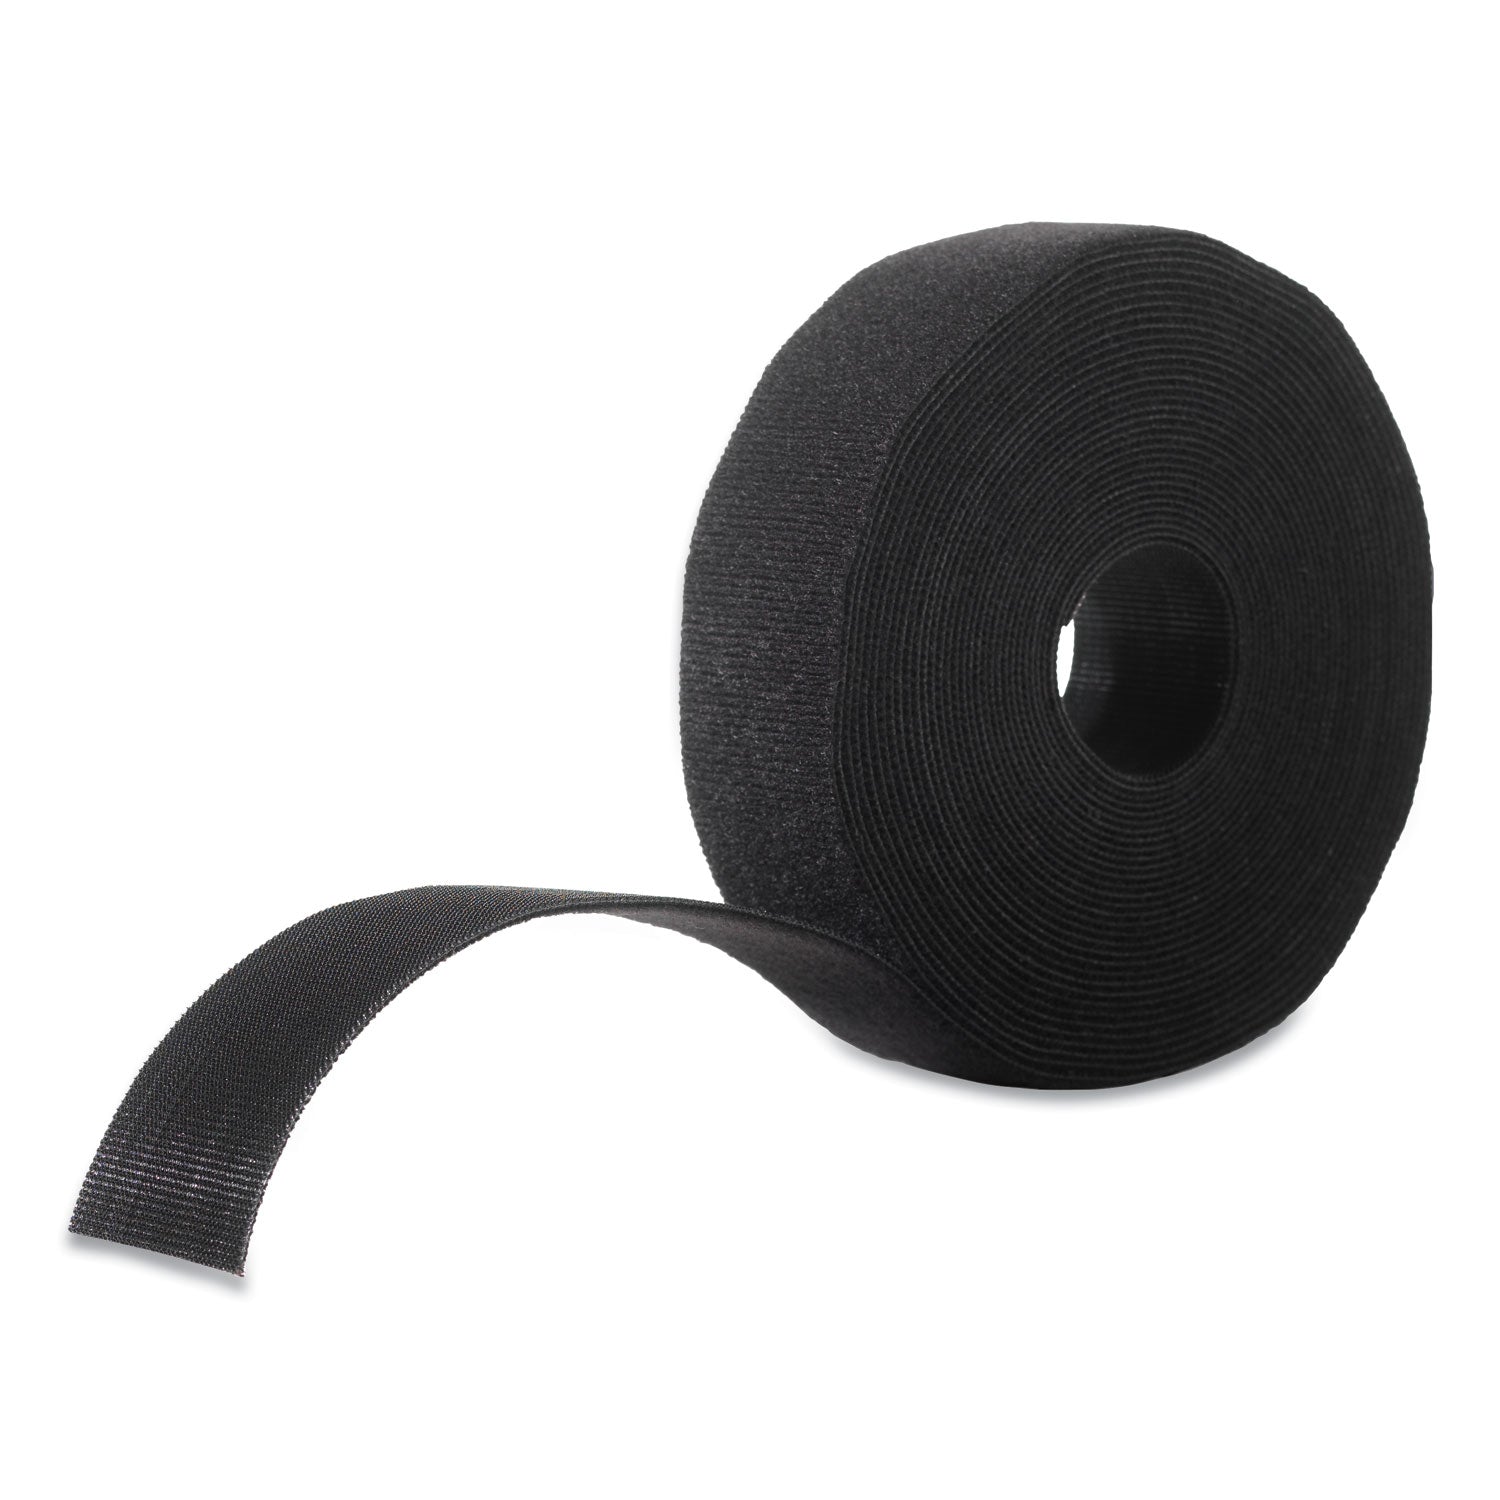 ONE-WRAP Pre-Cut Standard Ties, 0.75" x 12", Black - 